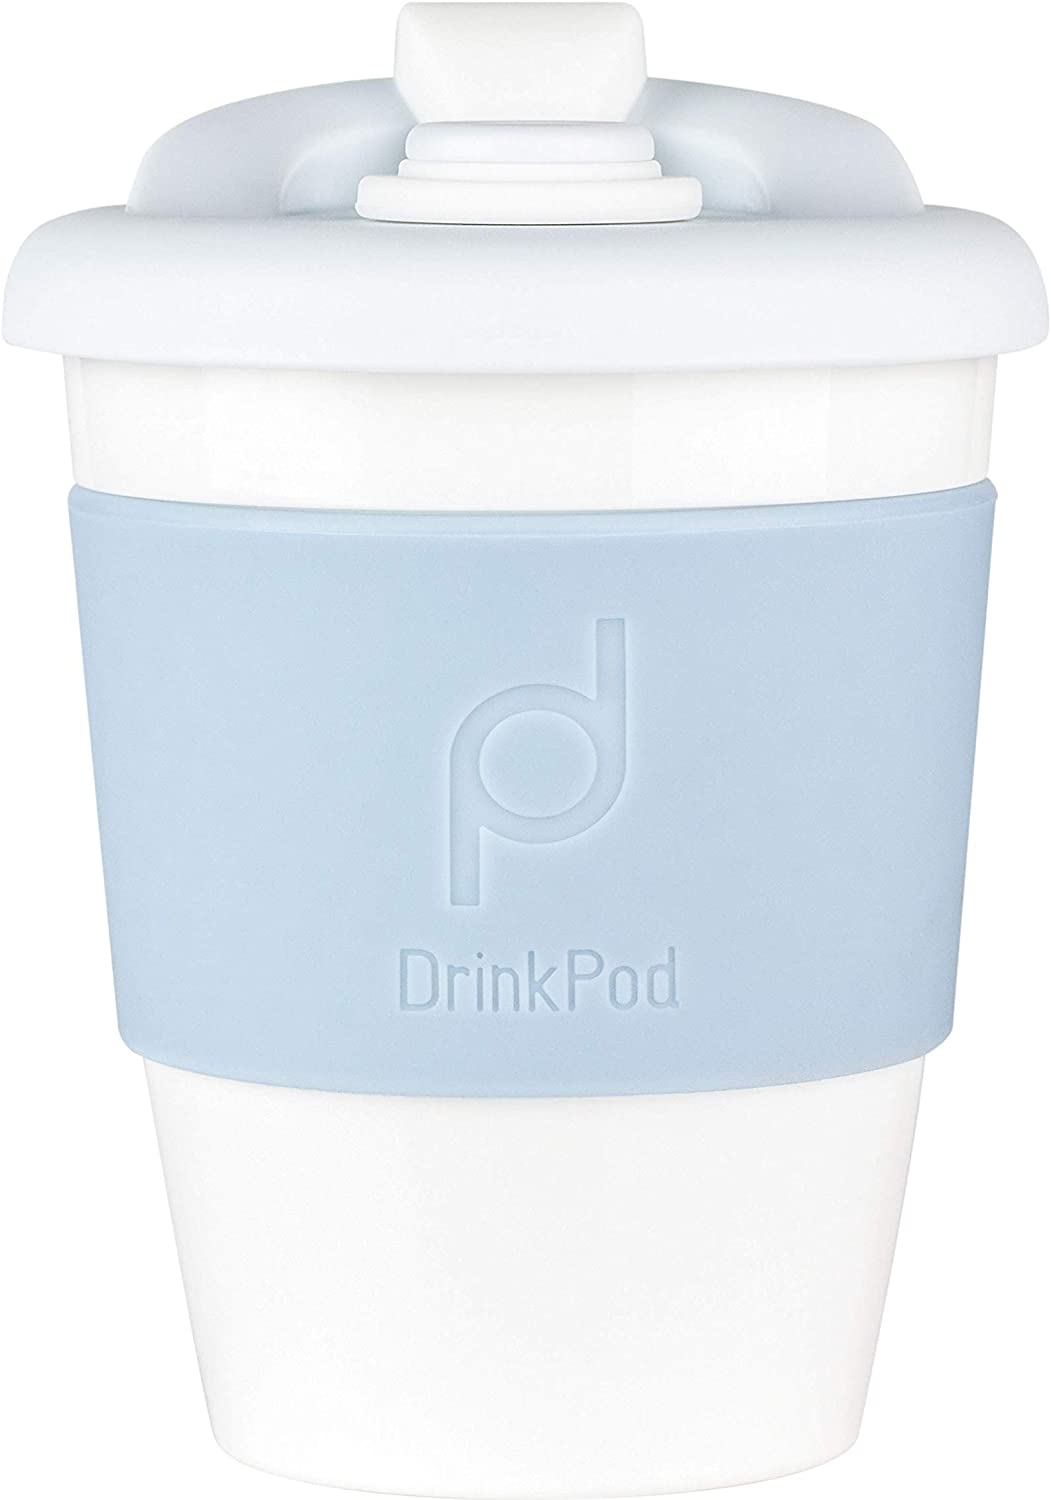 DrinkPod Reusable BPA Free 12oz Plastic Coffee Mug / Travel Mug - WINTER, WHITE